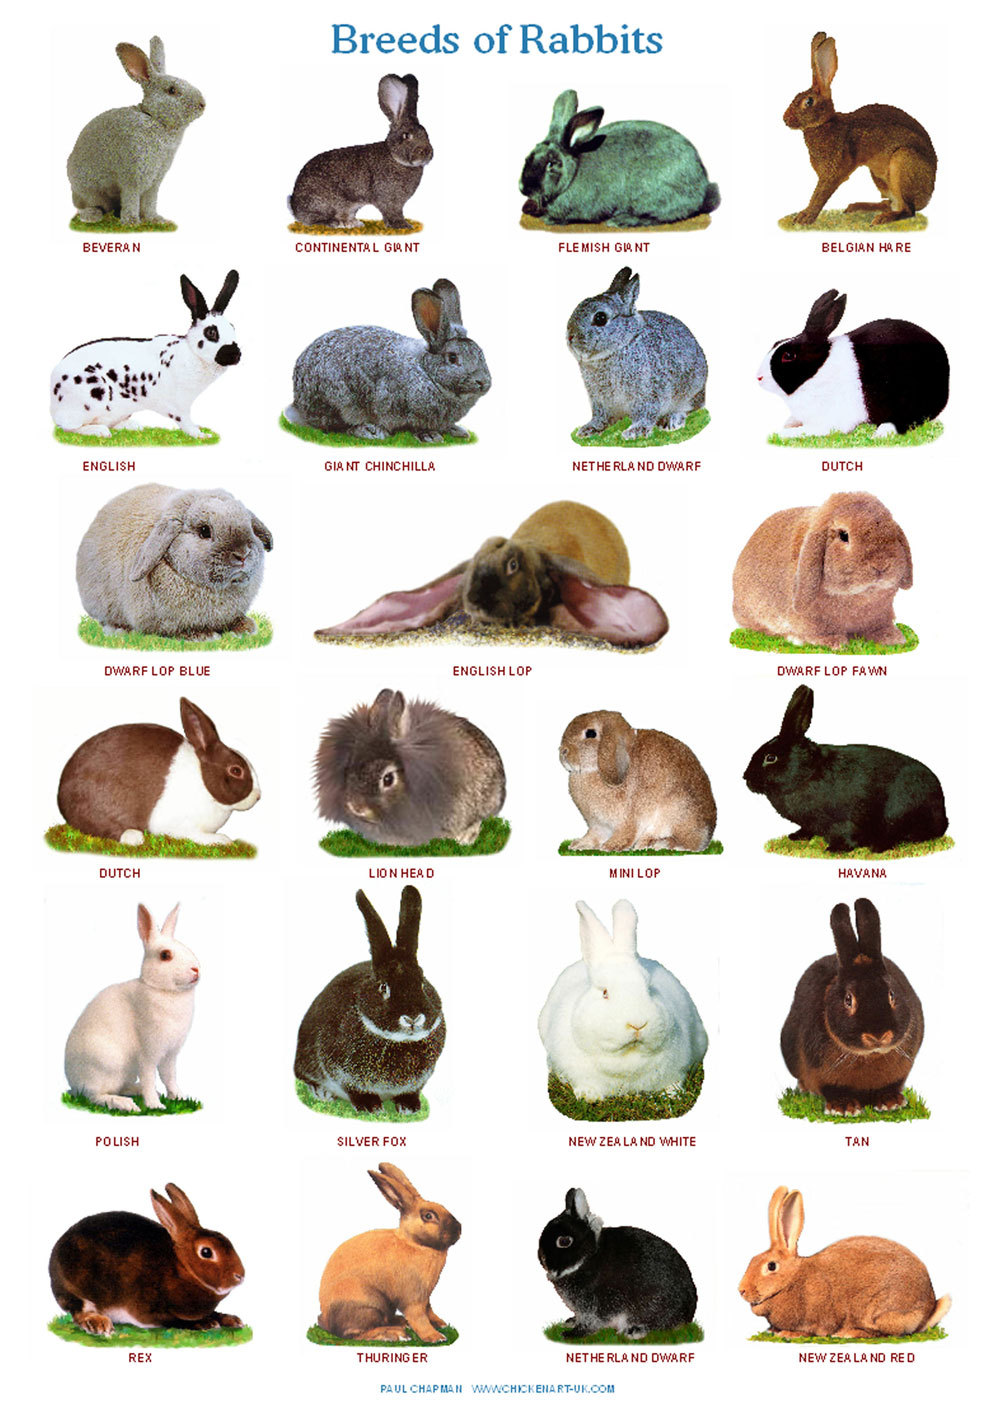 aurora-negro-rabbit-breed-usa-rabbit-breeders